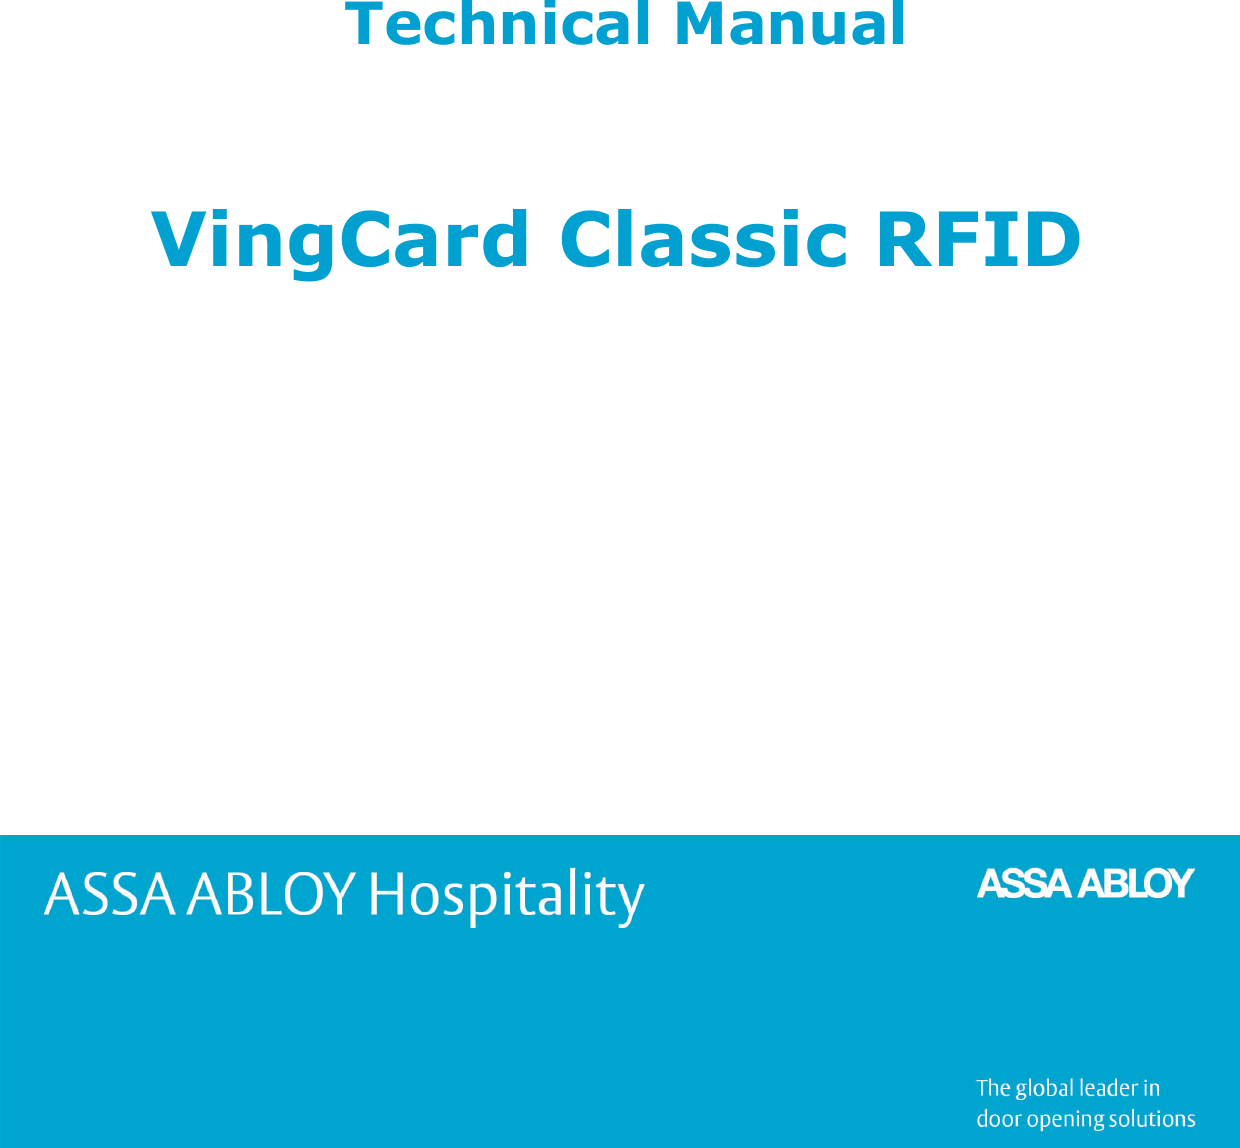 1ASSA ABLOY HospitalityTechnical ManualVingCard Classic RFID